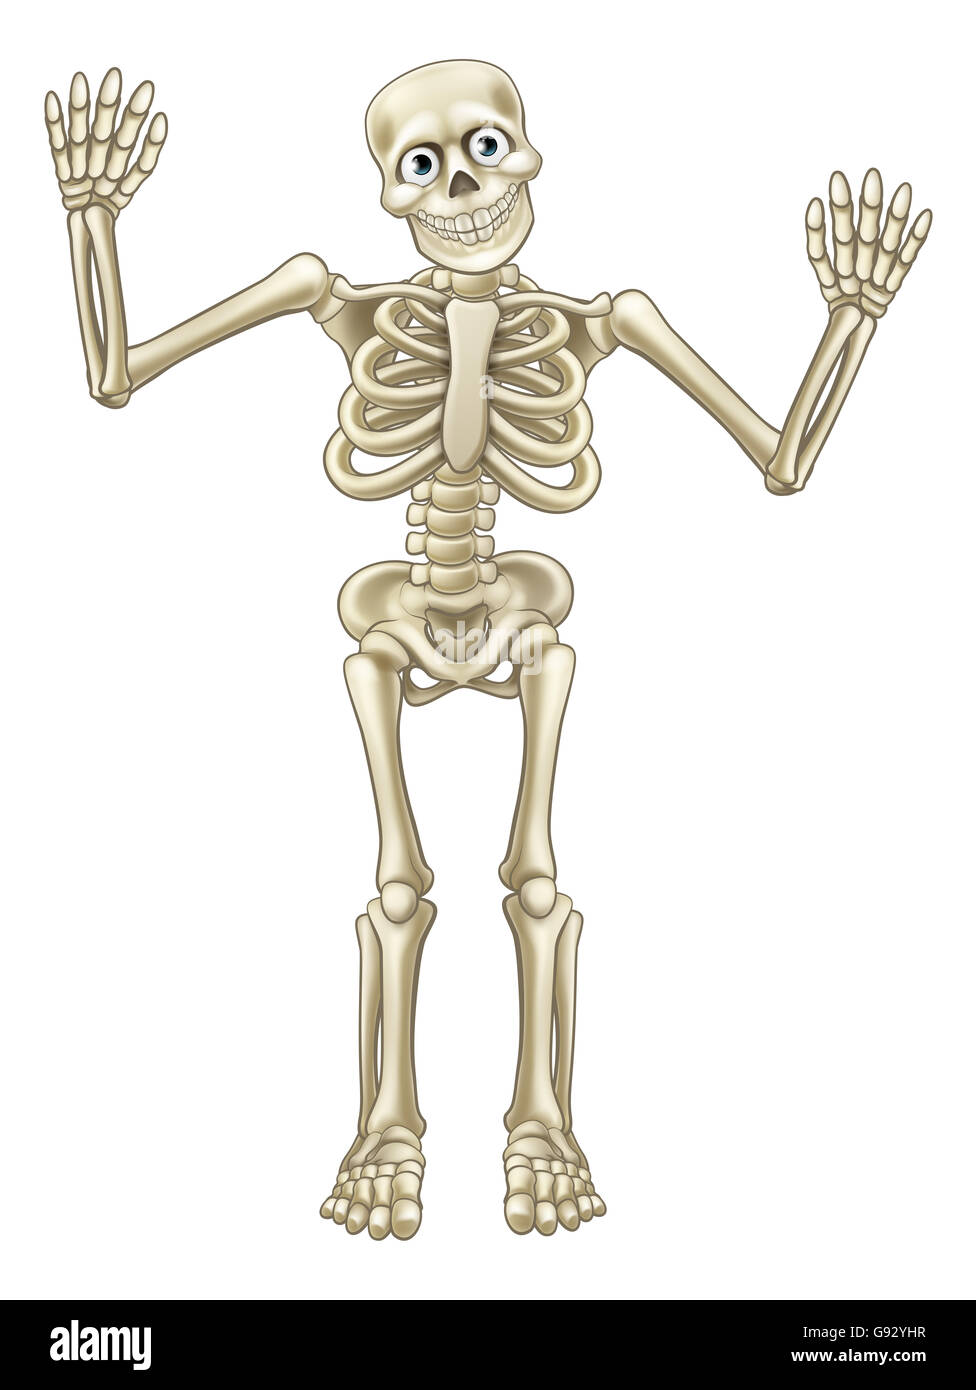 Skeleton cartoon character or Halloween monster waving his hands or dancing  Stock Photo - Alamy